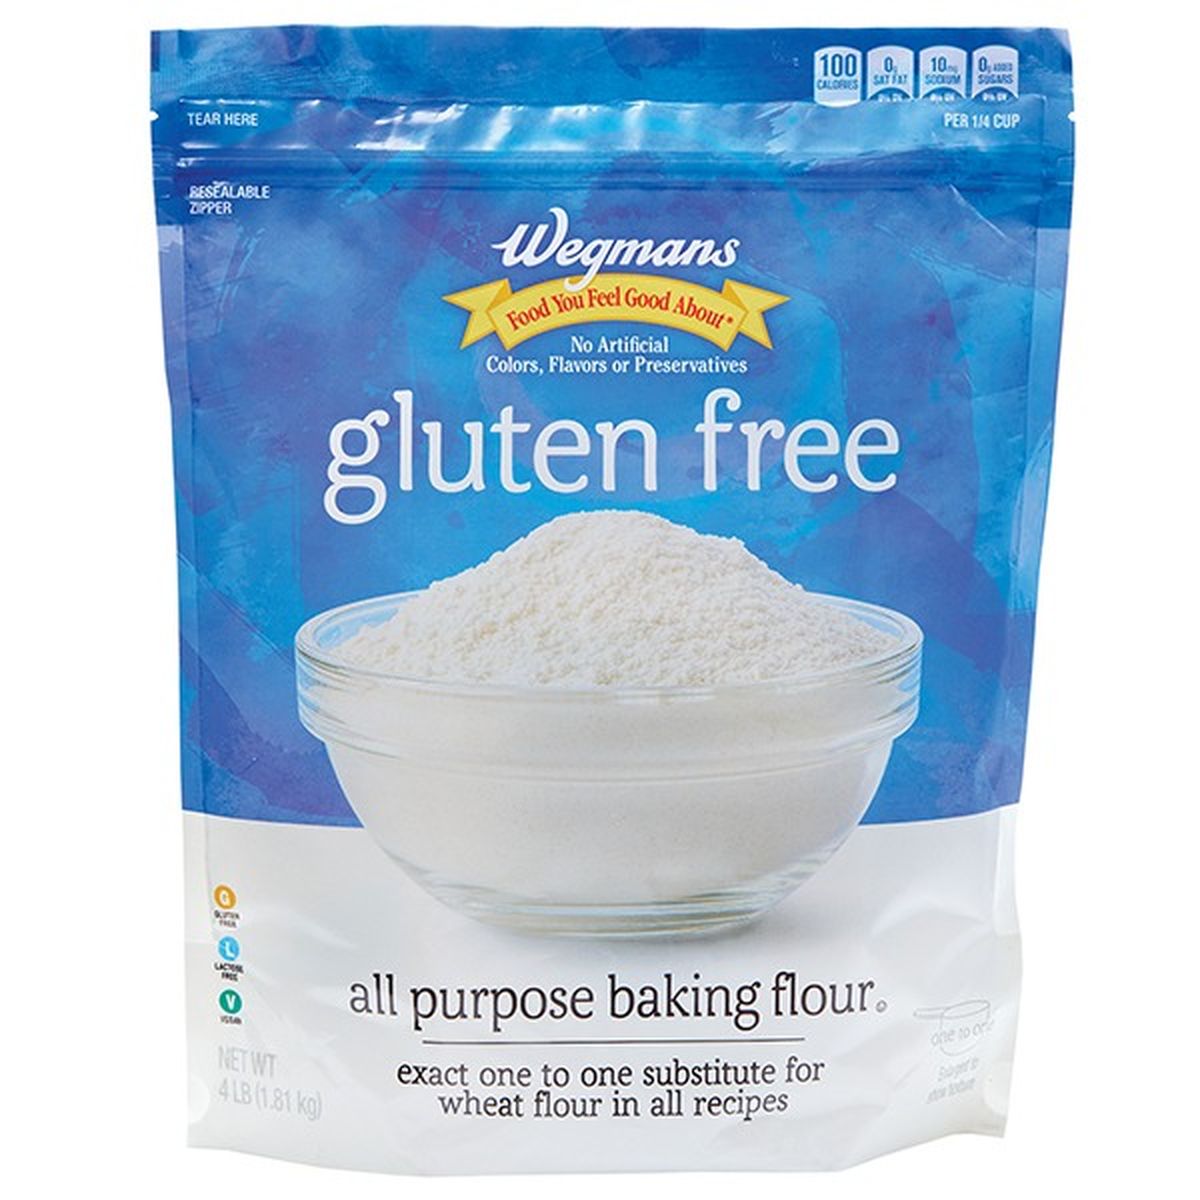 Calories in Wegmans Gluten Free All Purpose Baking Flour